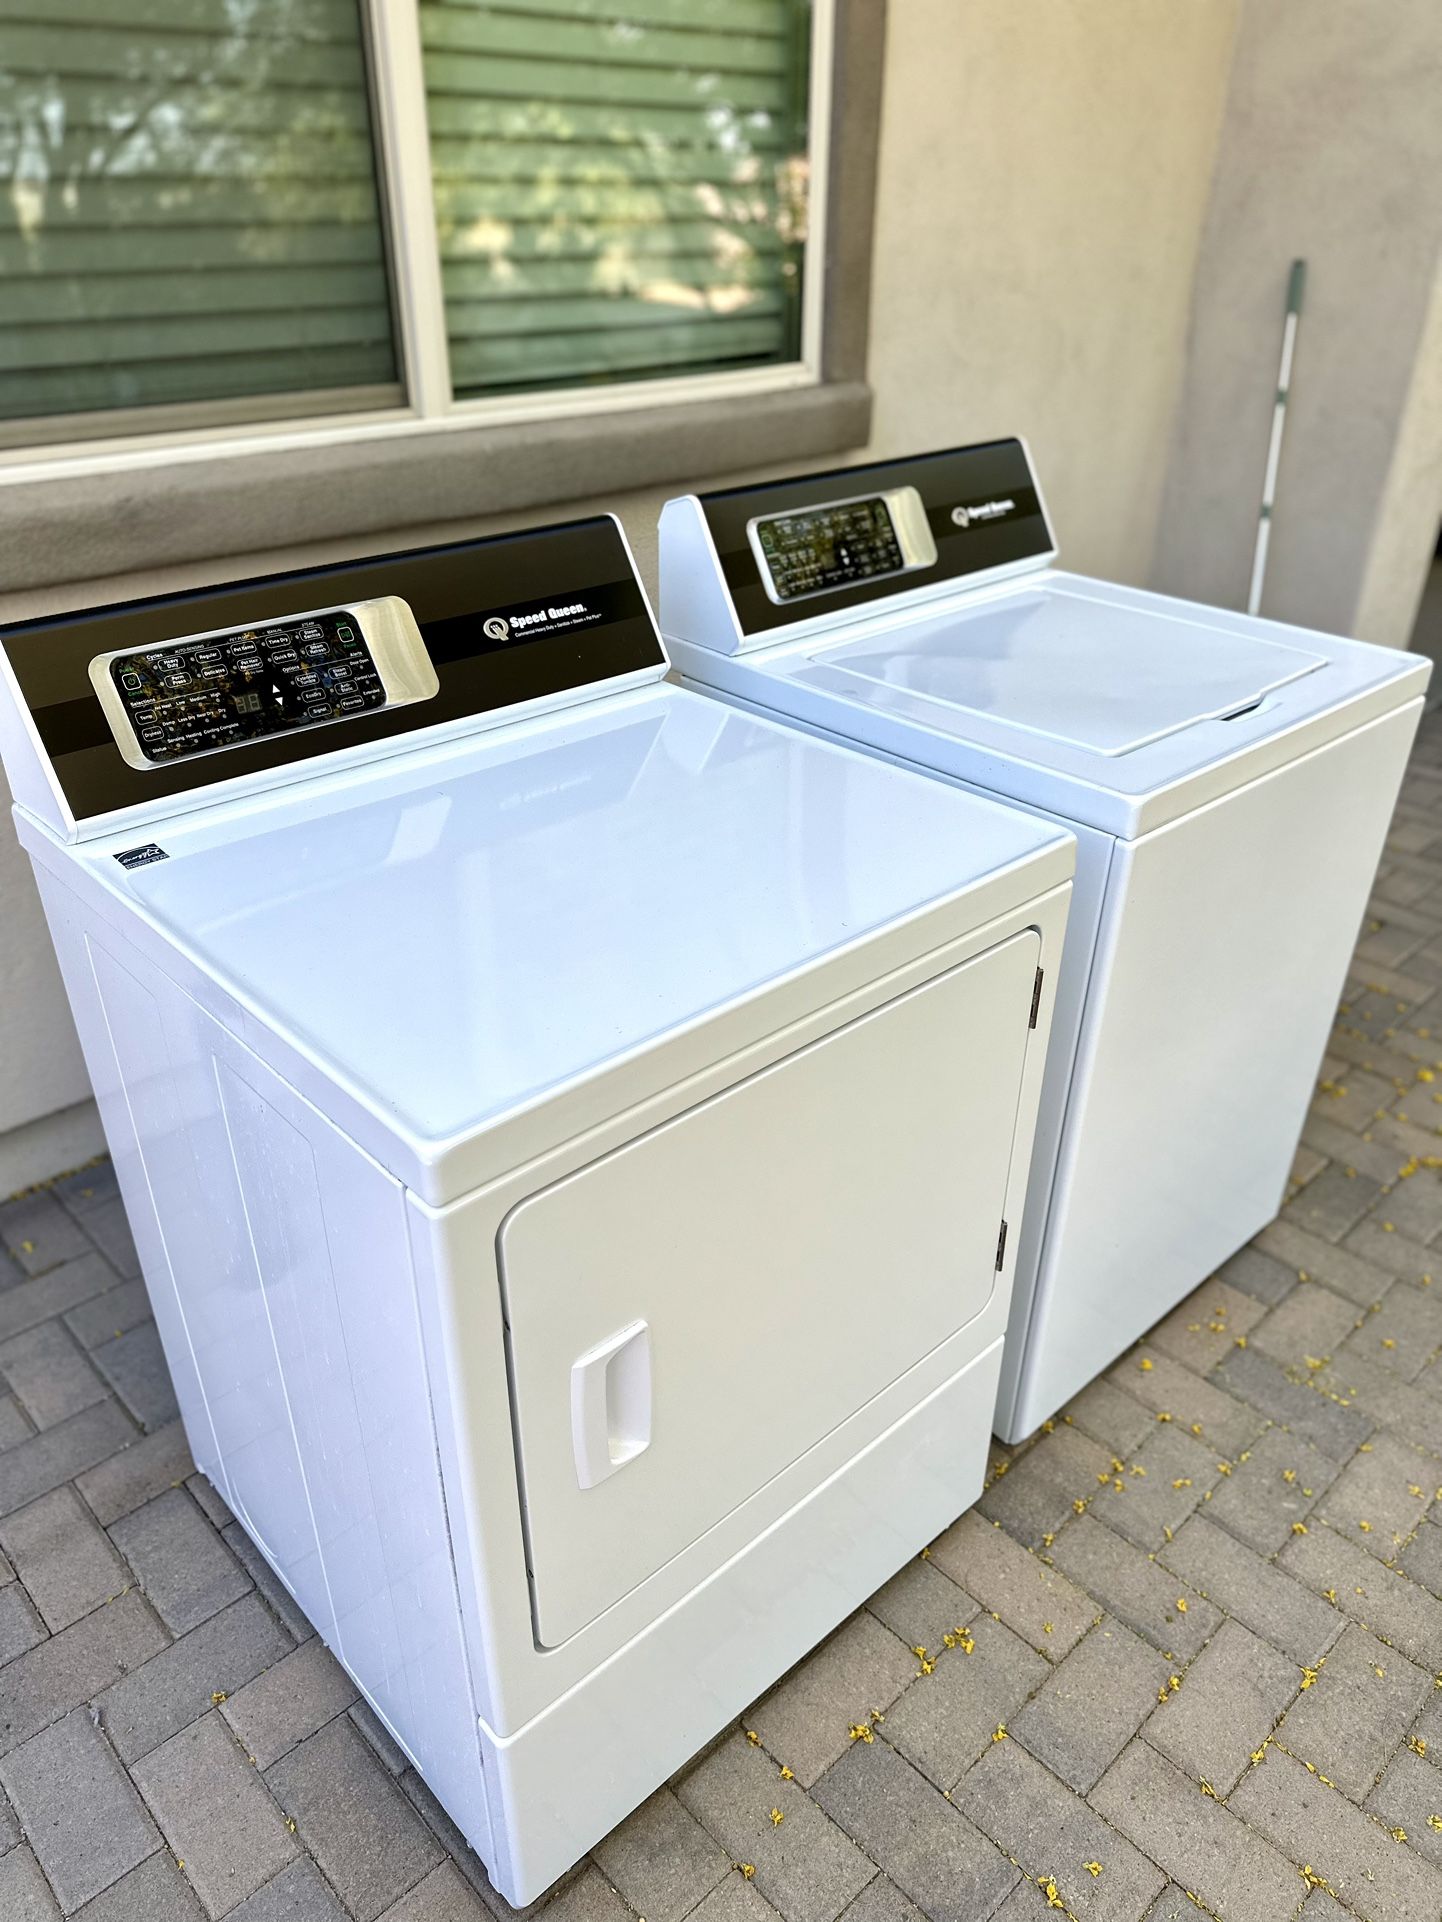 𝐒𝐏𝐄𝐄𝐃 𝐐𝐔𝐄𝐄𝐍 𝐄𝐥𝐞𝐜𝐭𝐫𝐢𝐜 Commercial Heavy Duty Washer & Dryer  